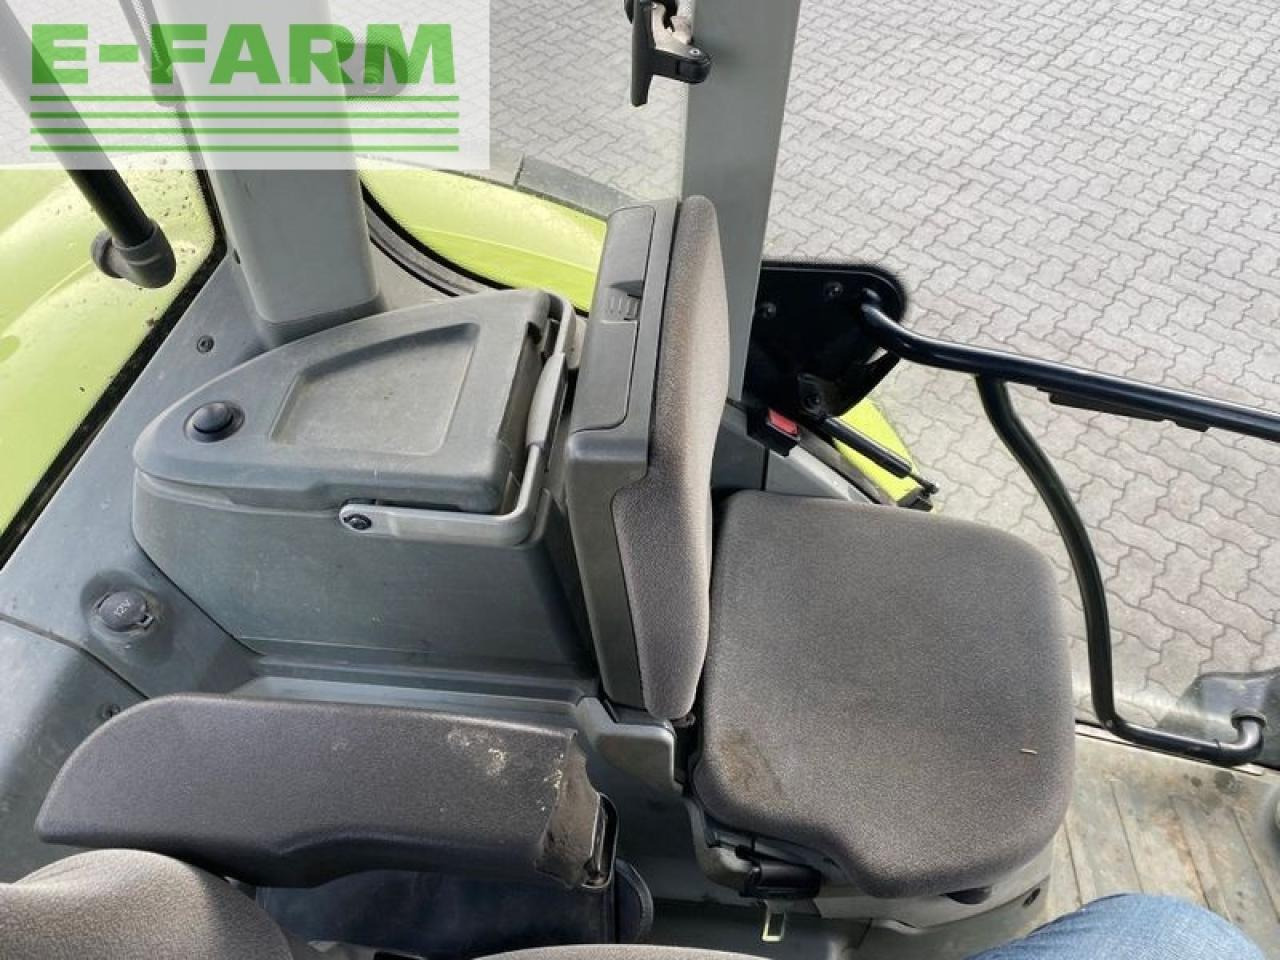 Farm tractor CLAAS arion 620 cmatic